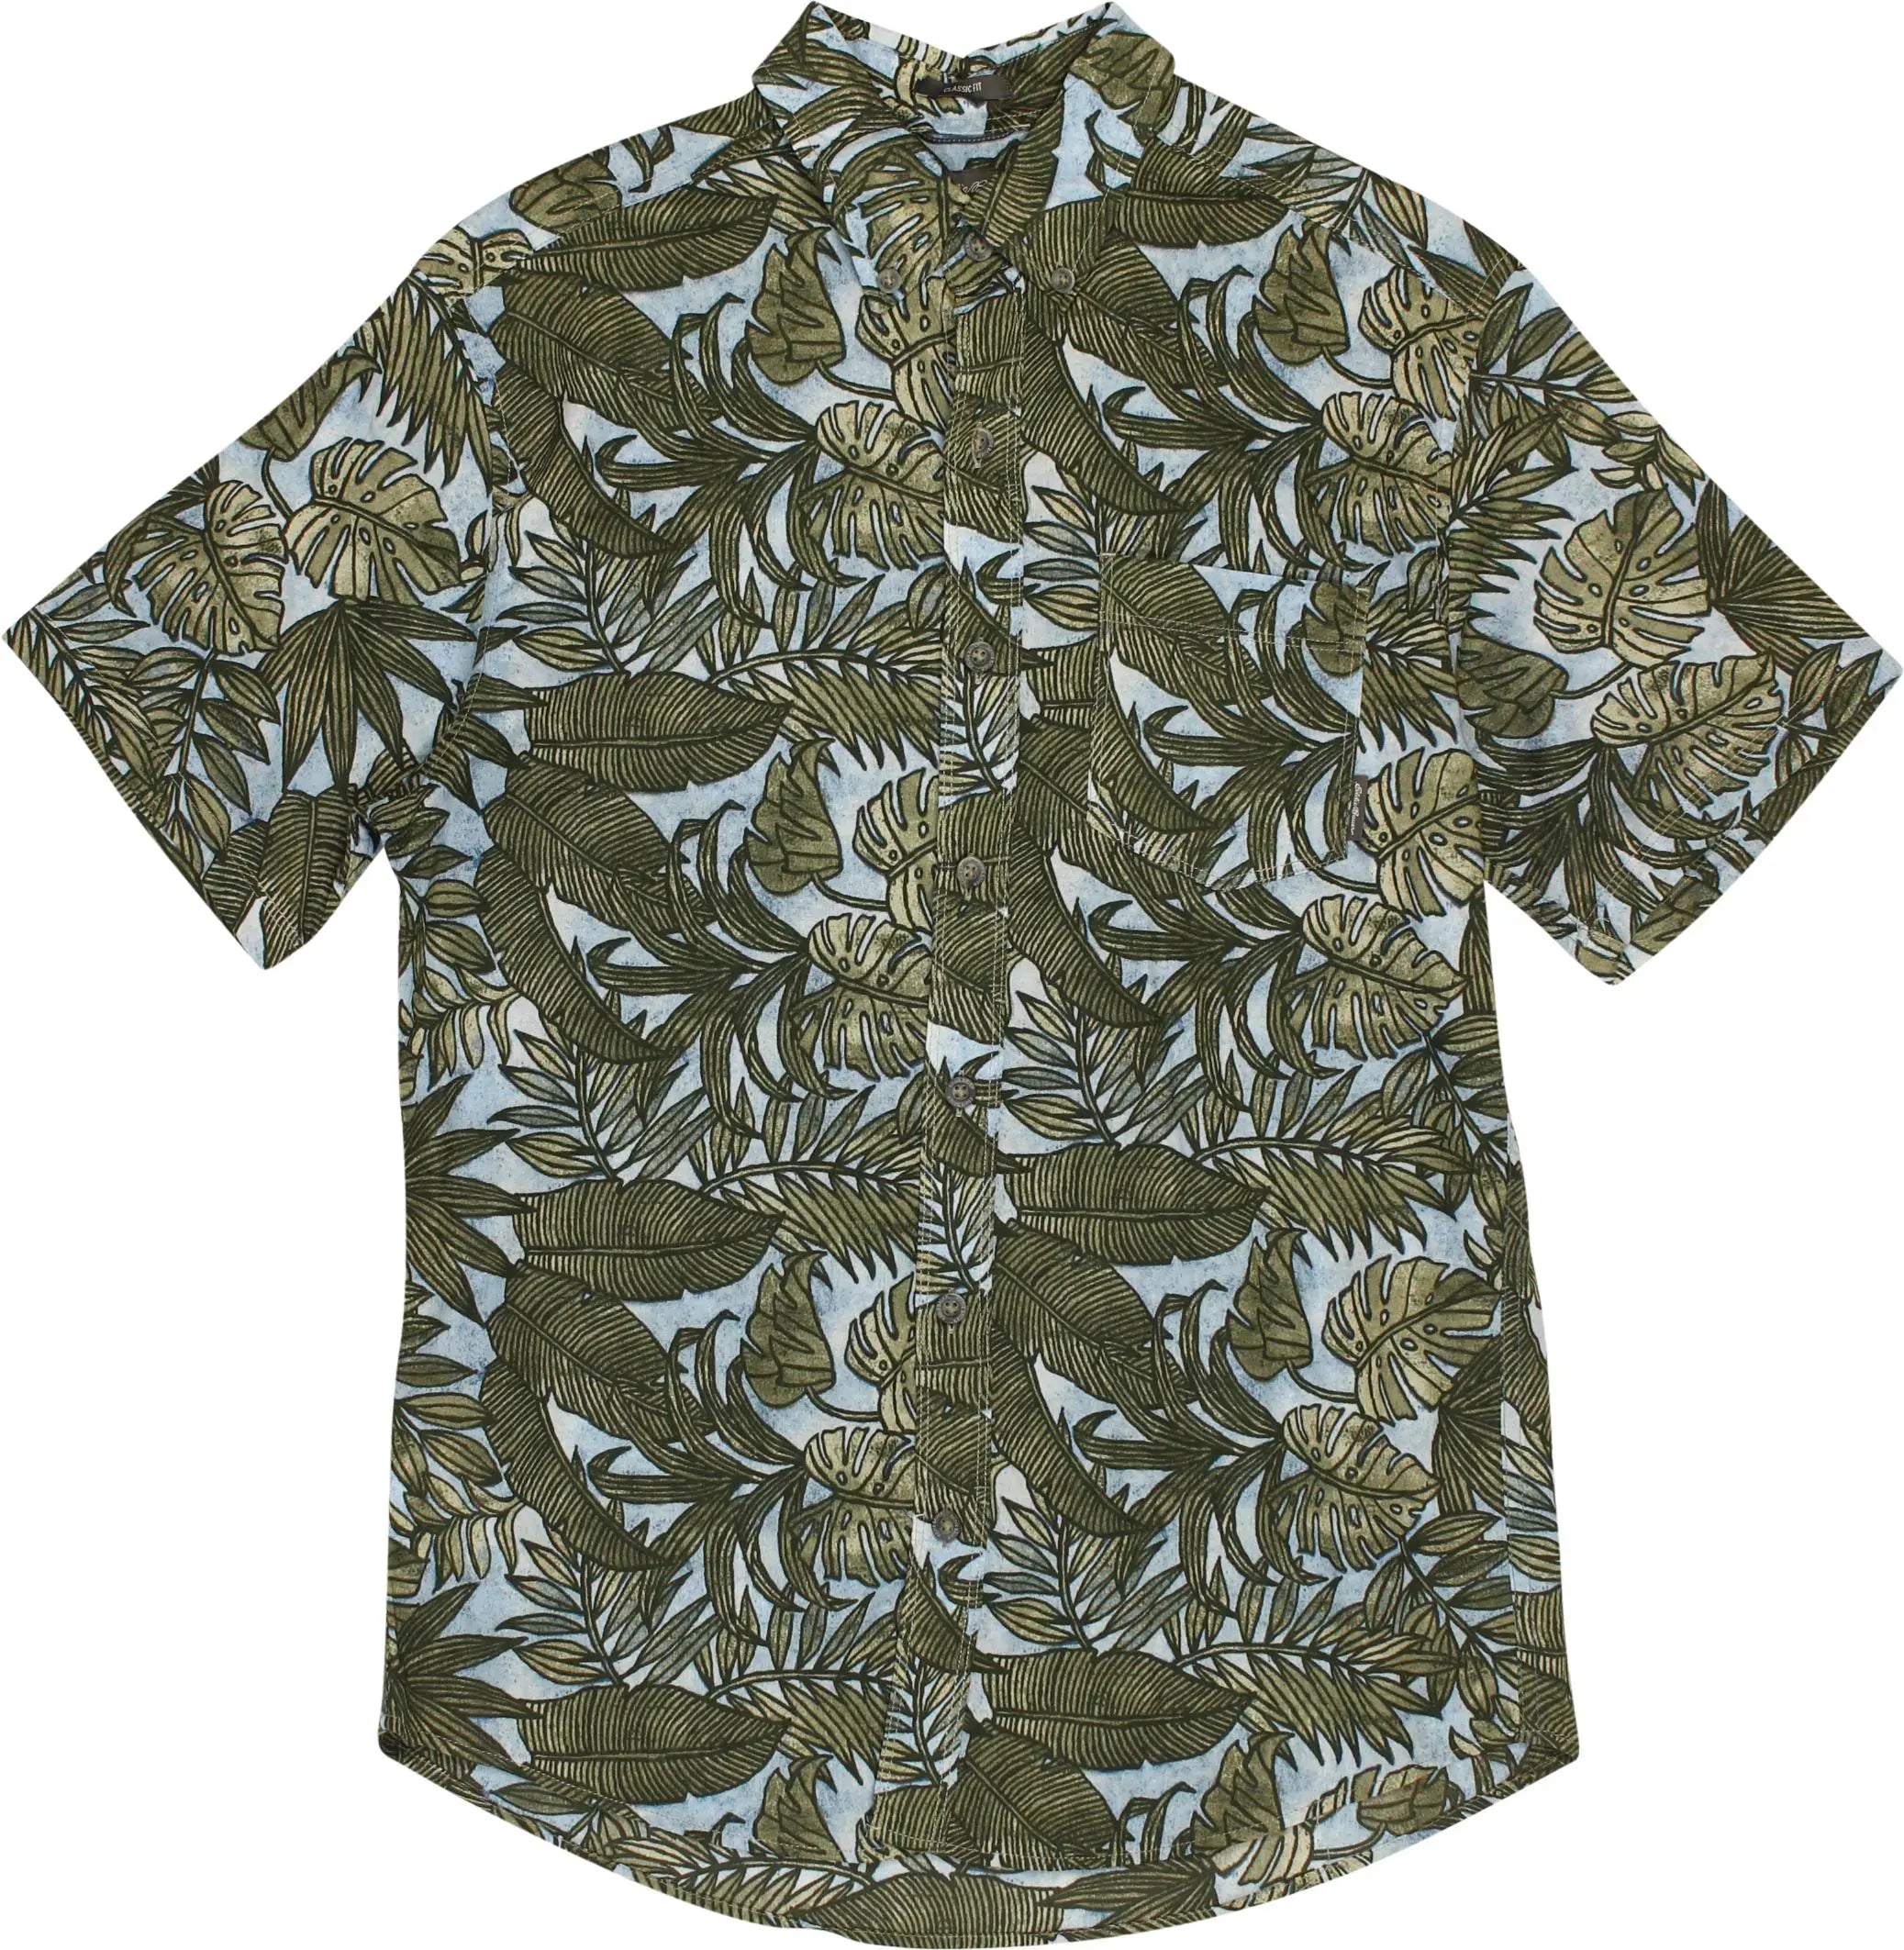 Eddie Bauer - Hawaiian Shirt by Eddie Bauer- ThriftTale.com - Vintage and second handclothing